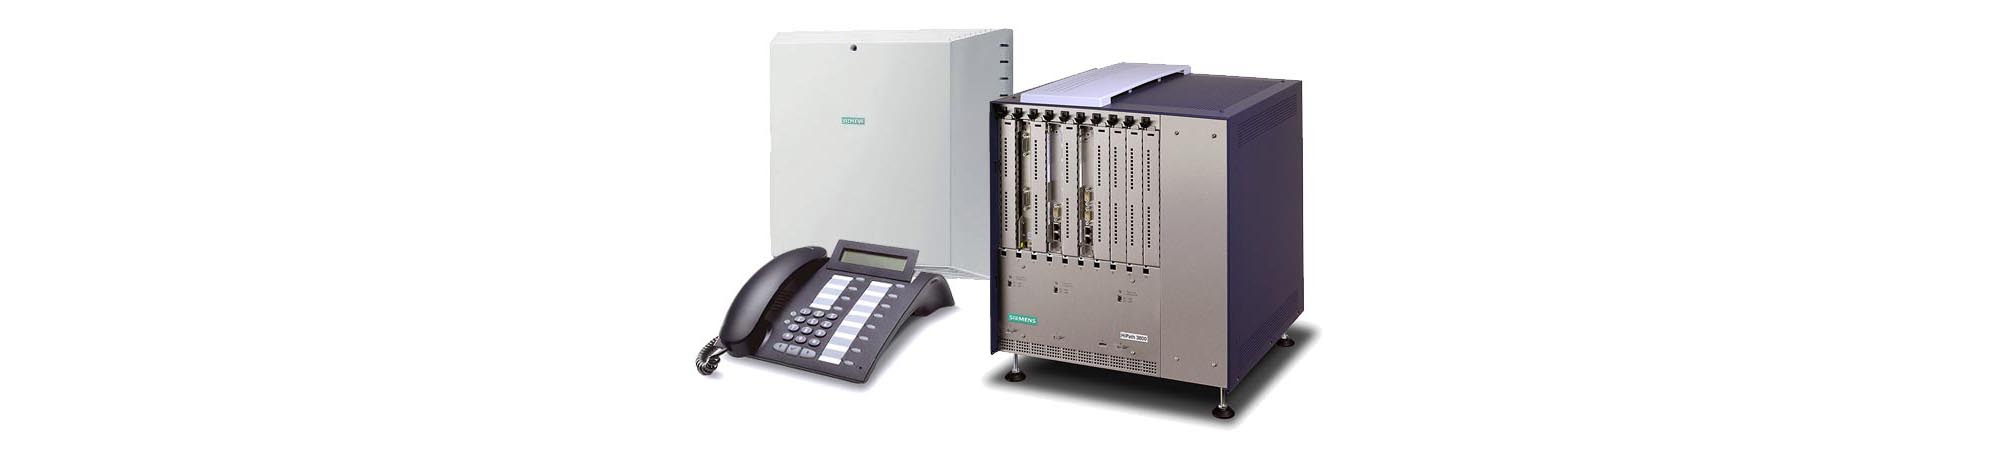 Maintenance on HiPath telephone systems